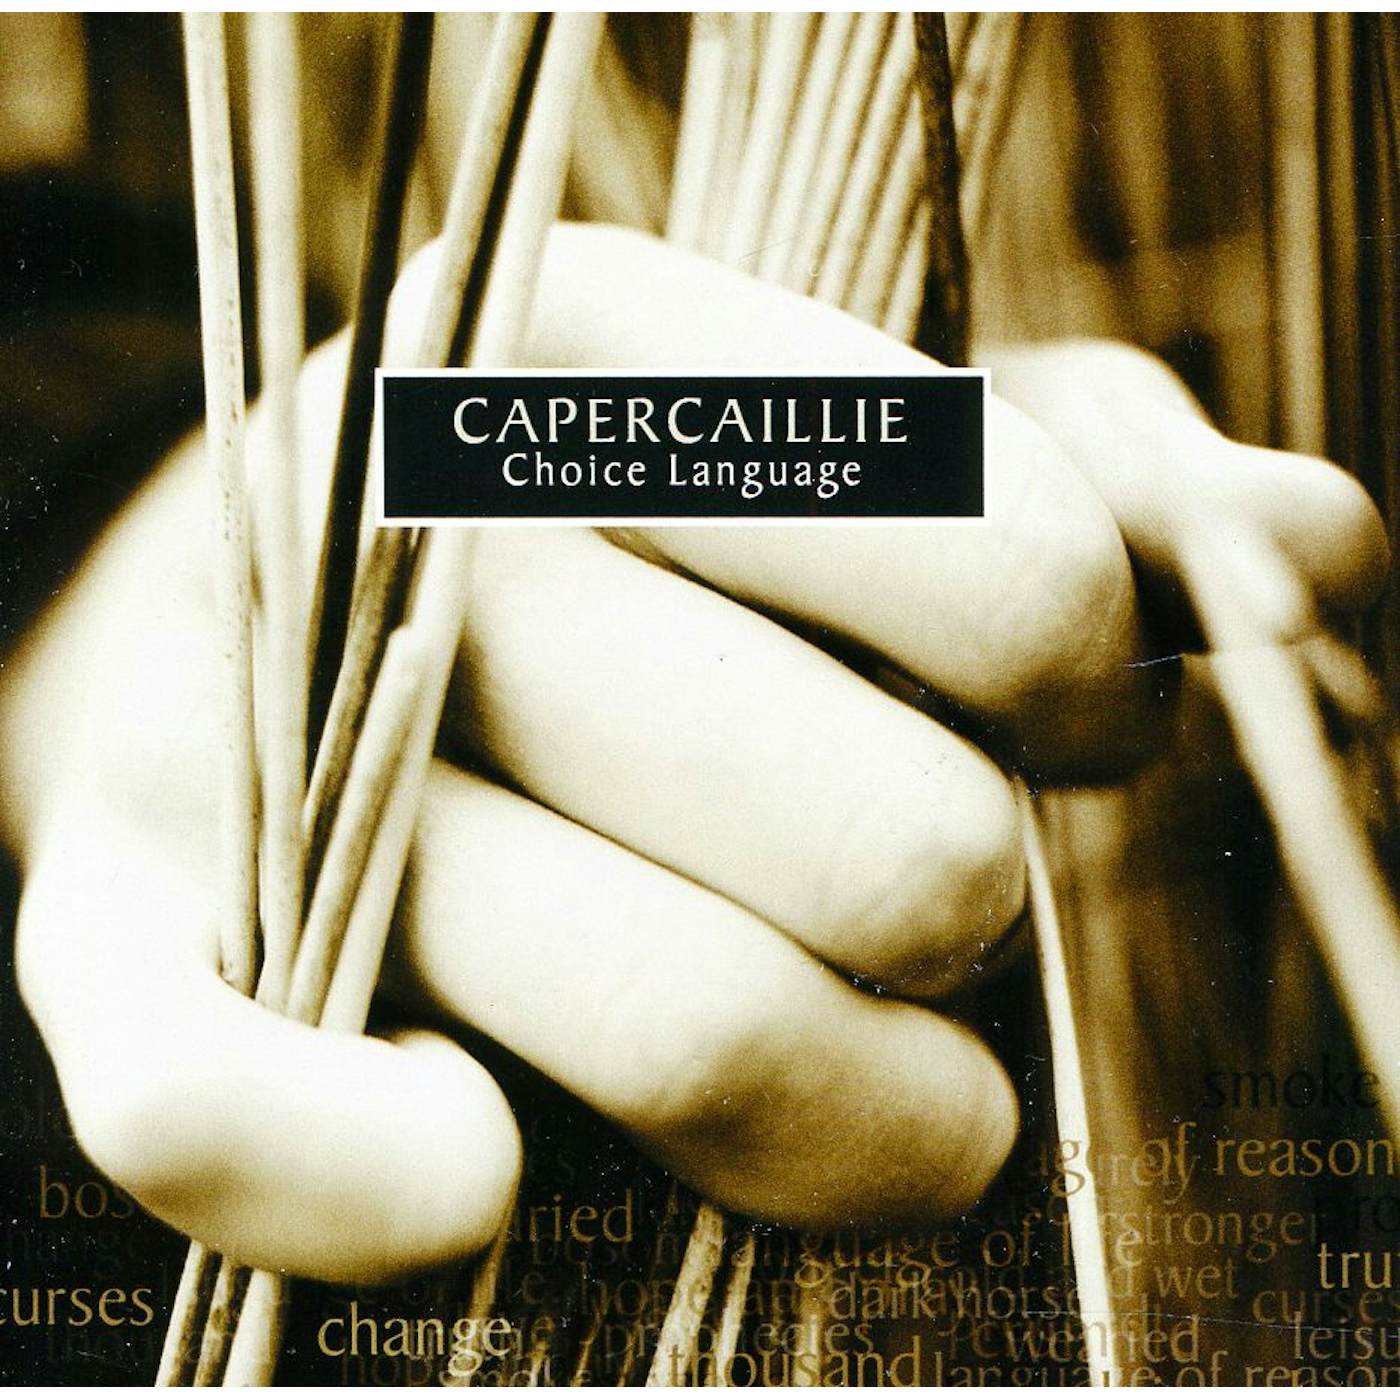 Capercaillie CHOICE LANGUAGE CD